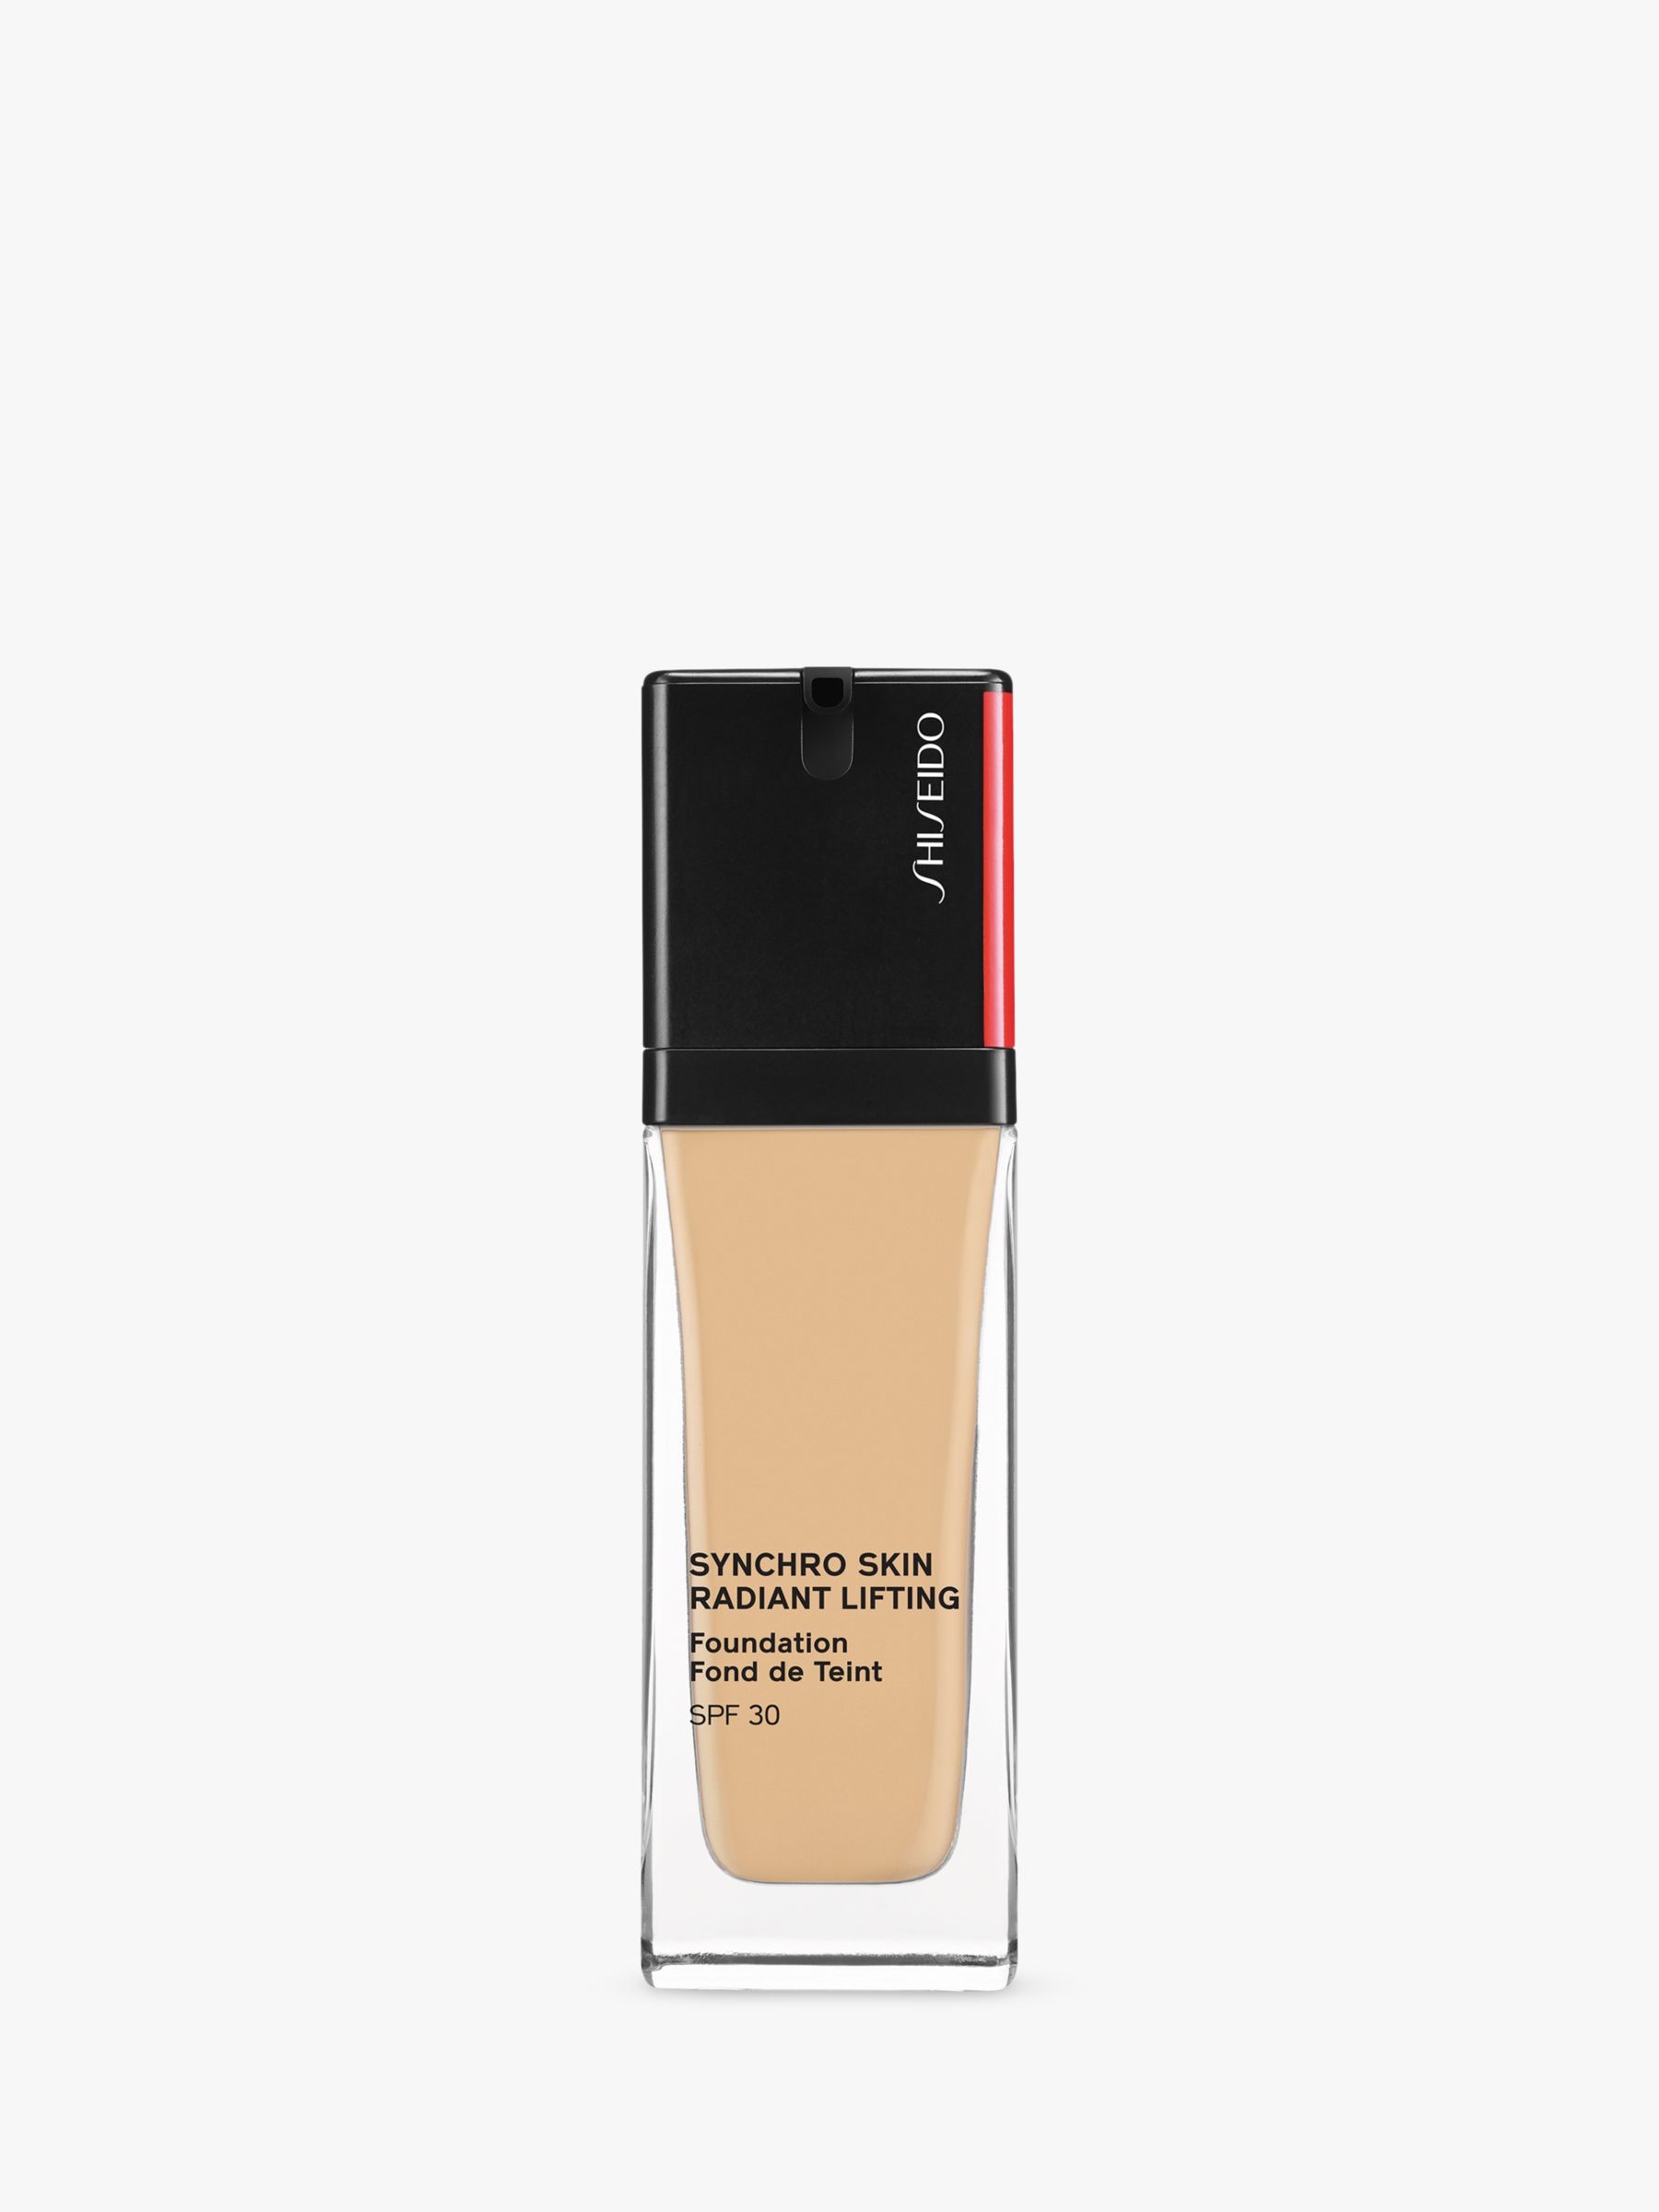 Shiseido Synchro Skin Radiant Lifting Foundation SPF 30, 250 Sand 1